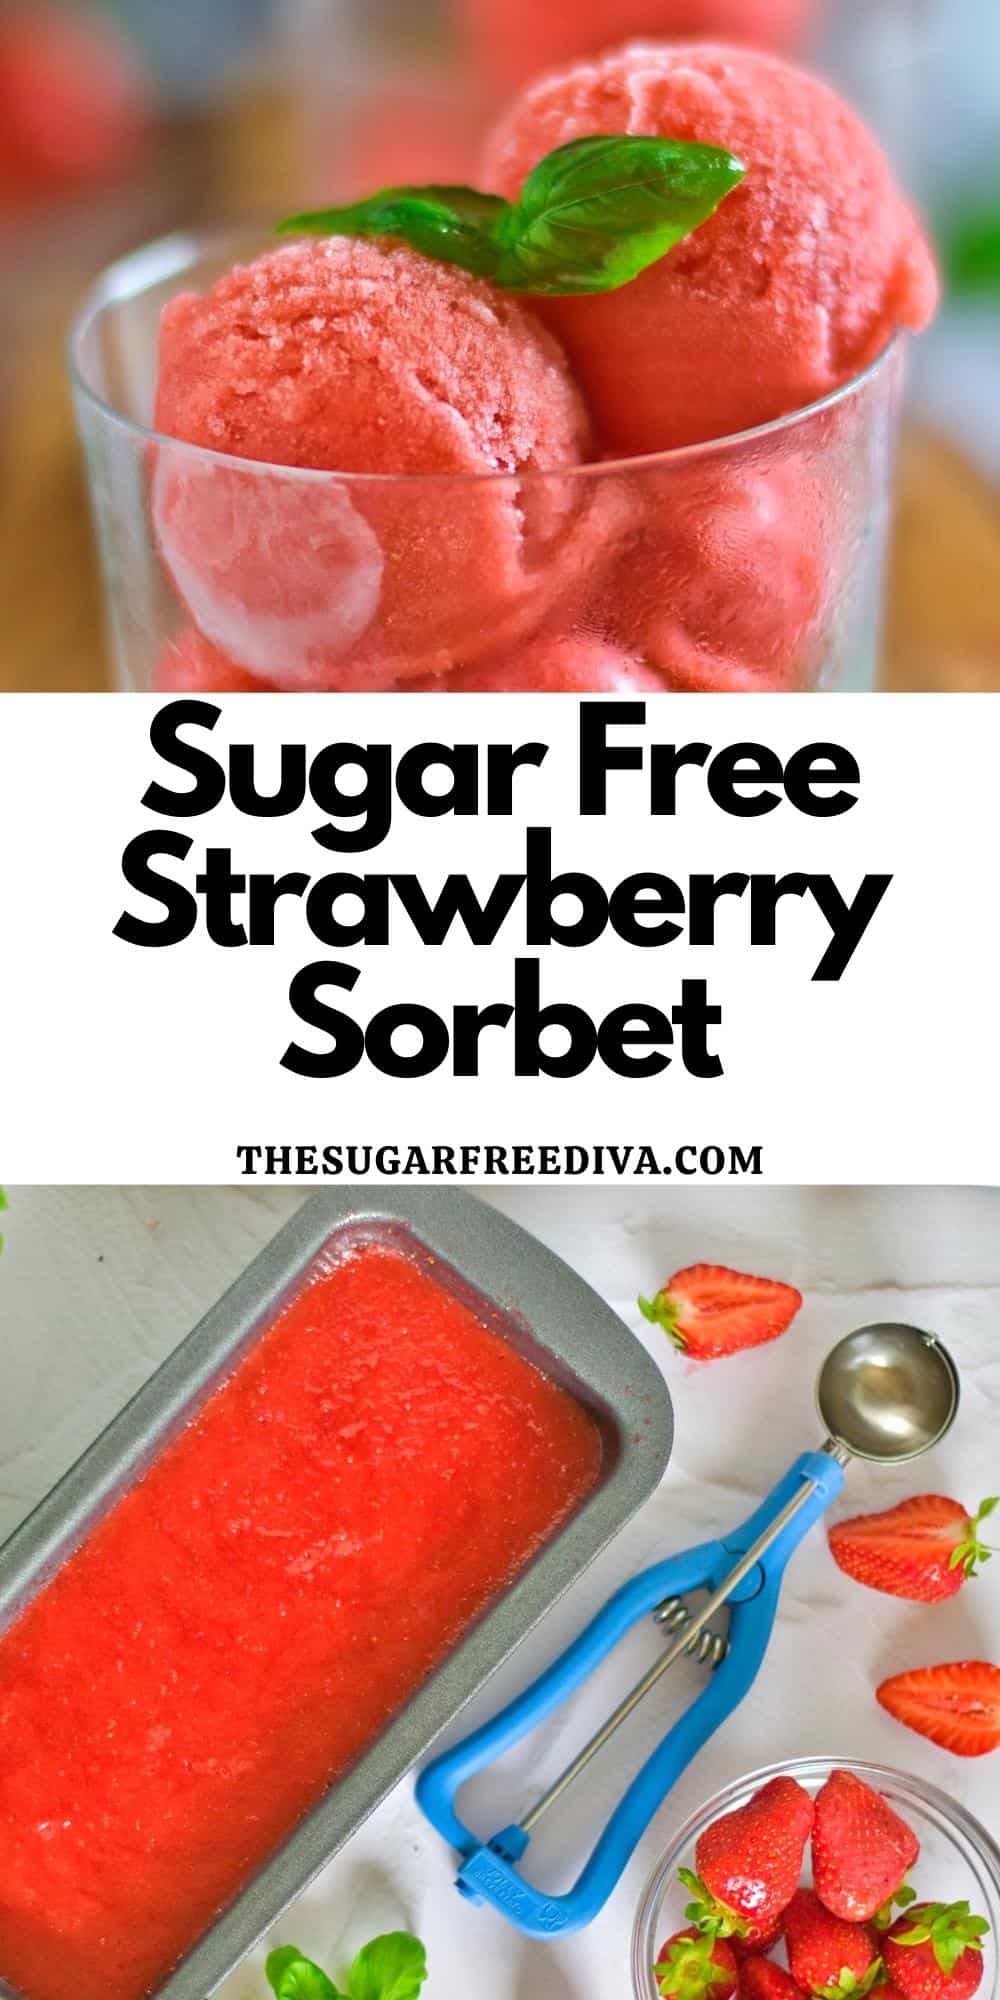 Sugar Free Strawberry Sorbet